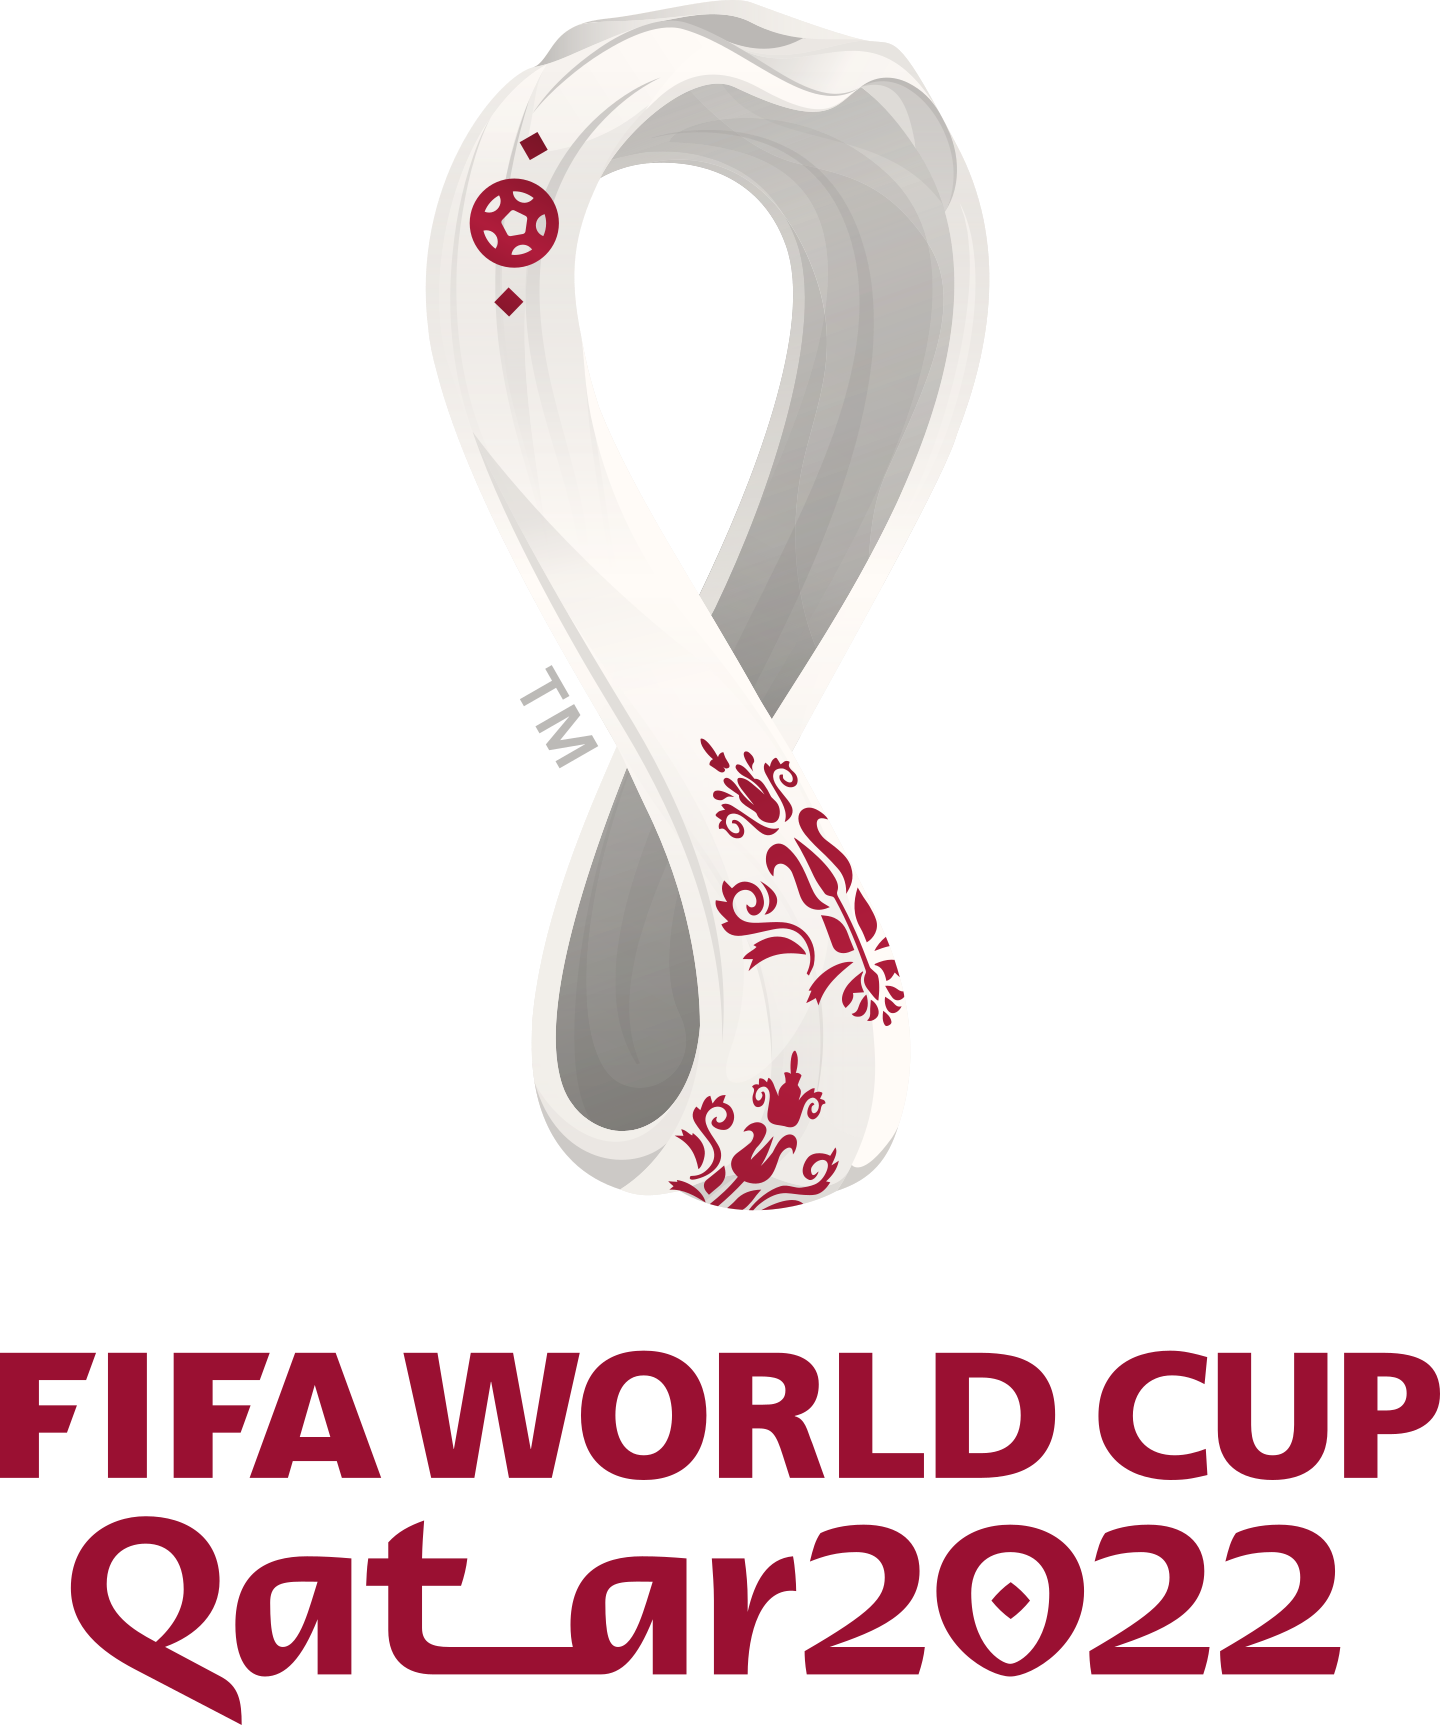 world cup 2022 logo 2 - World Cup Qatar 2022 Logo